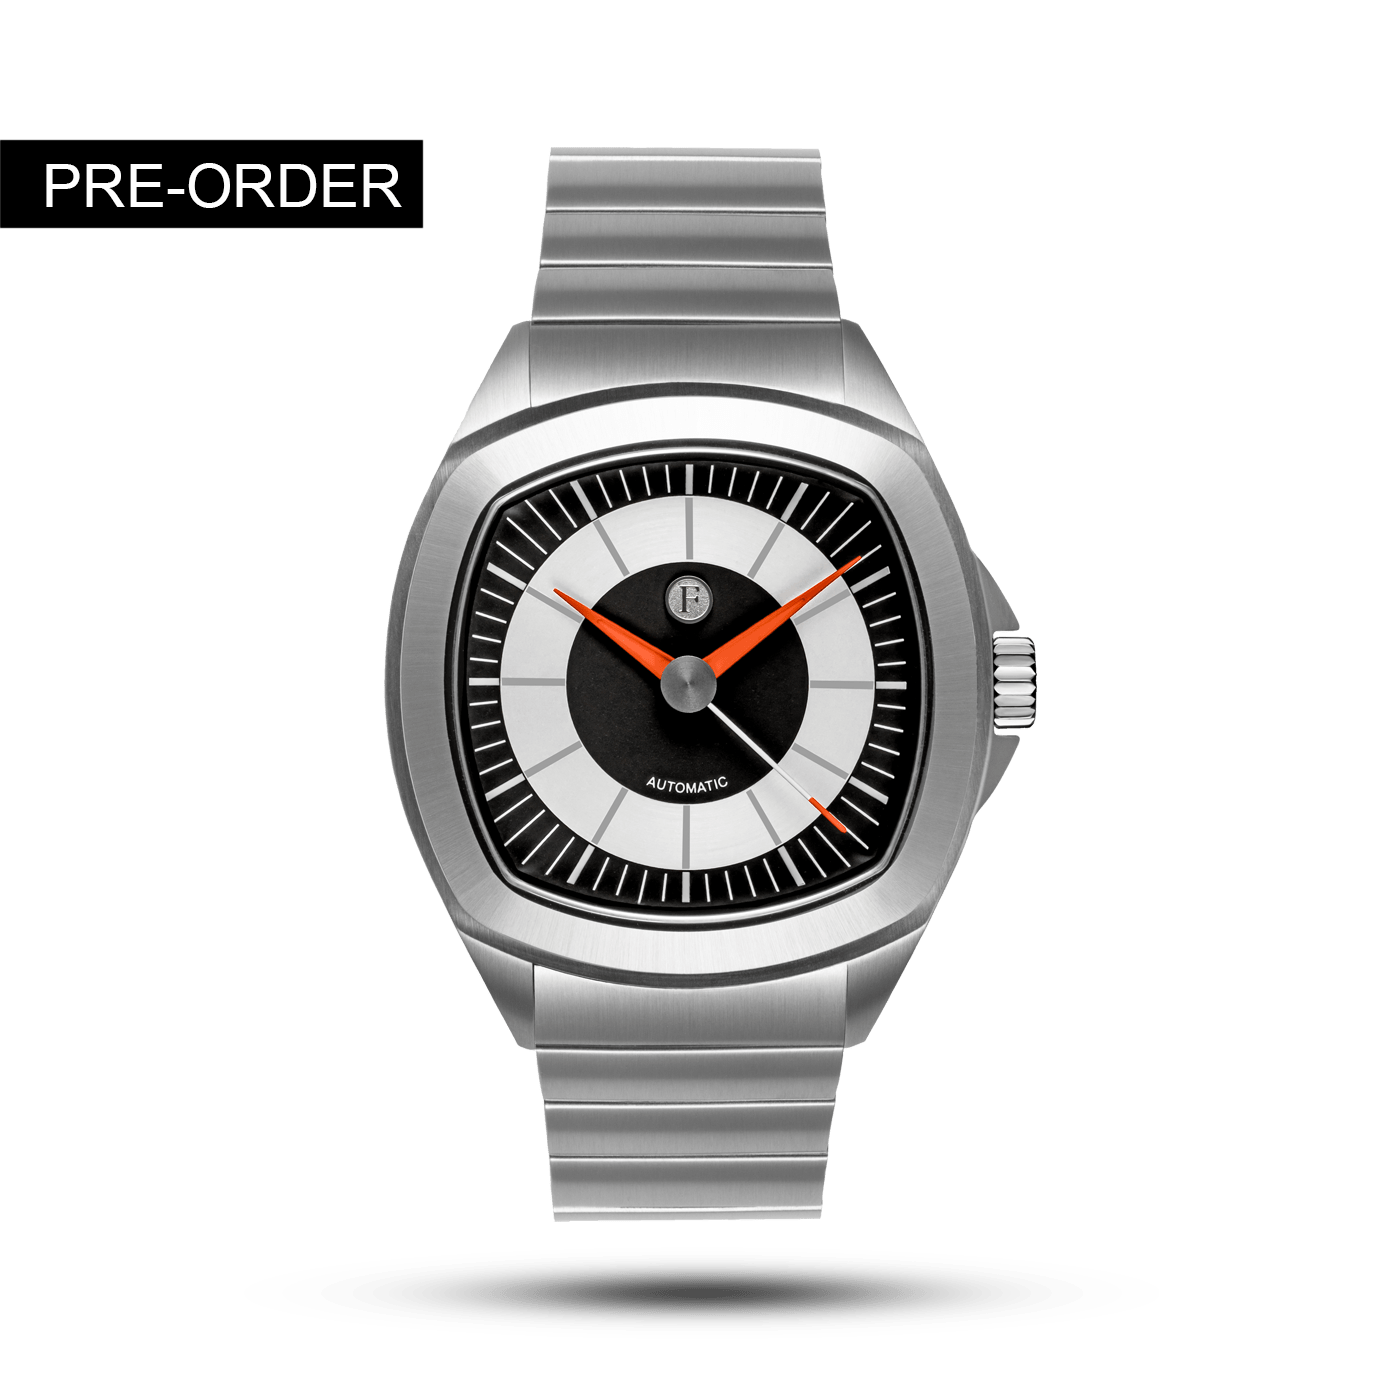 TIME MASTER 70 SILVER - Ferro & Company Watches